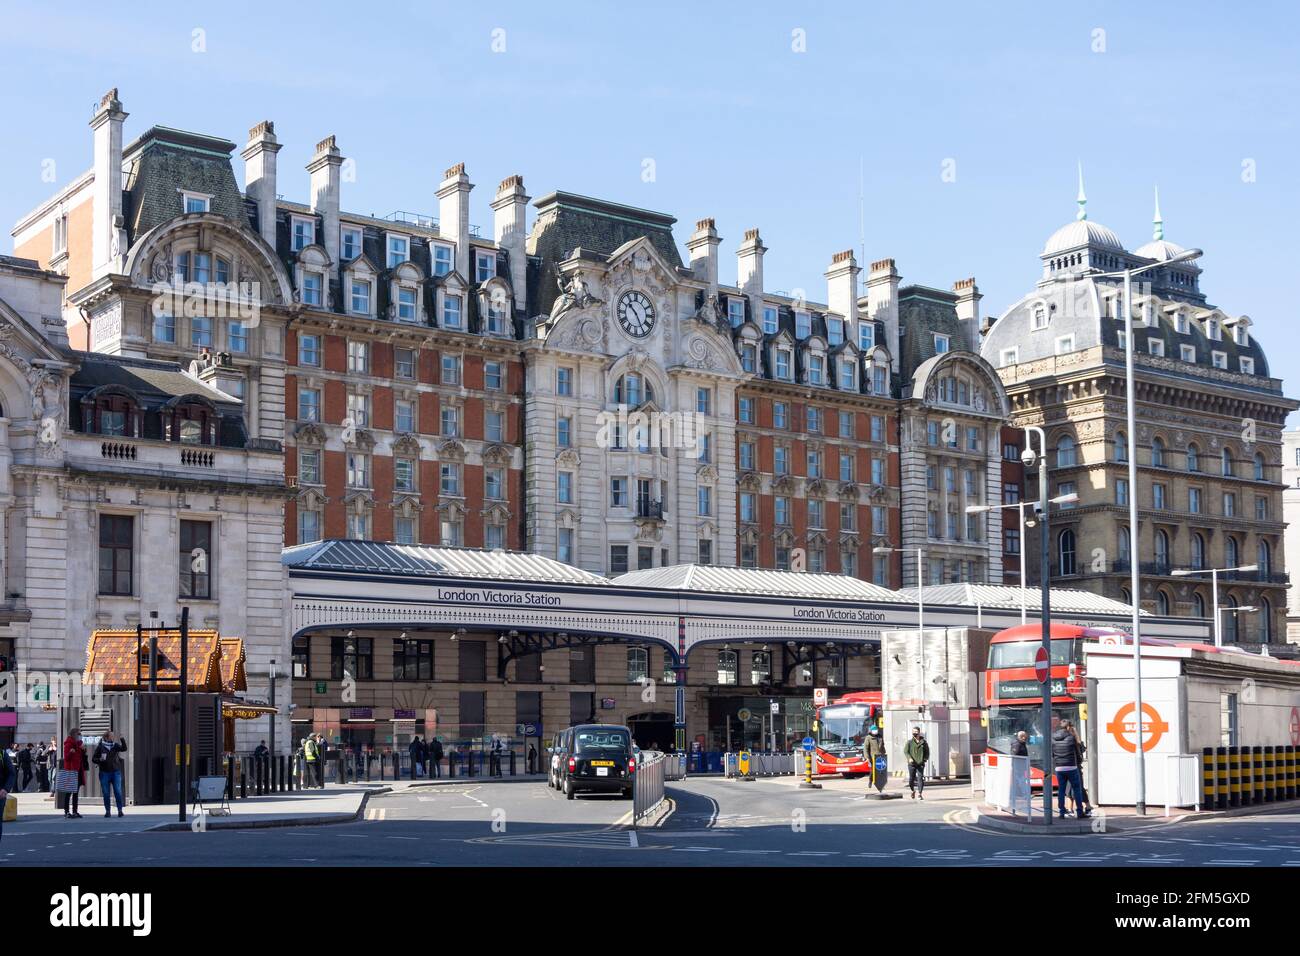 London Victoria Railway Station, Belgravia, City of Westminster, Greater London, England, United Kingdom Stock Photo